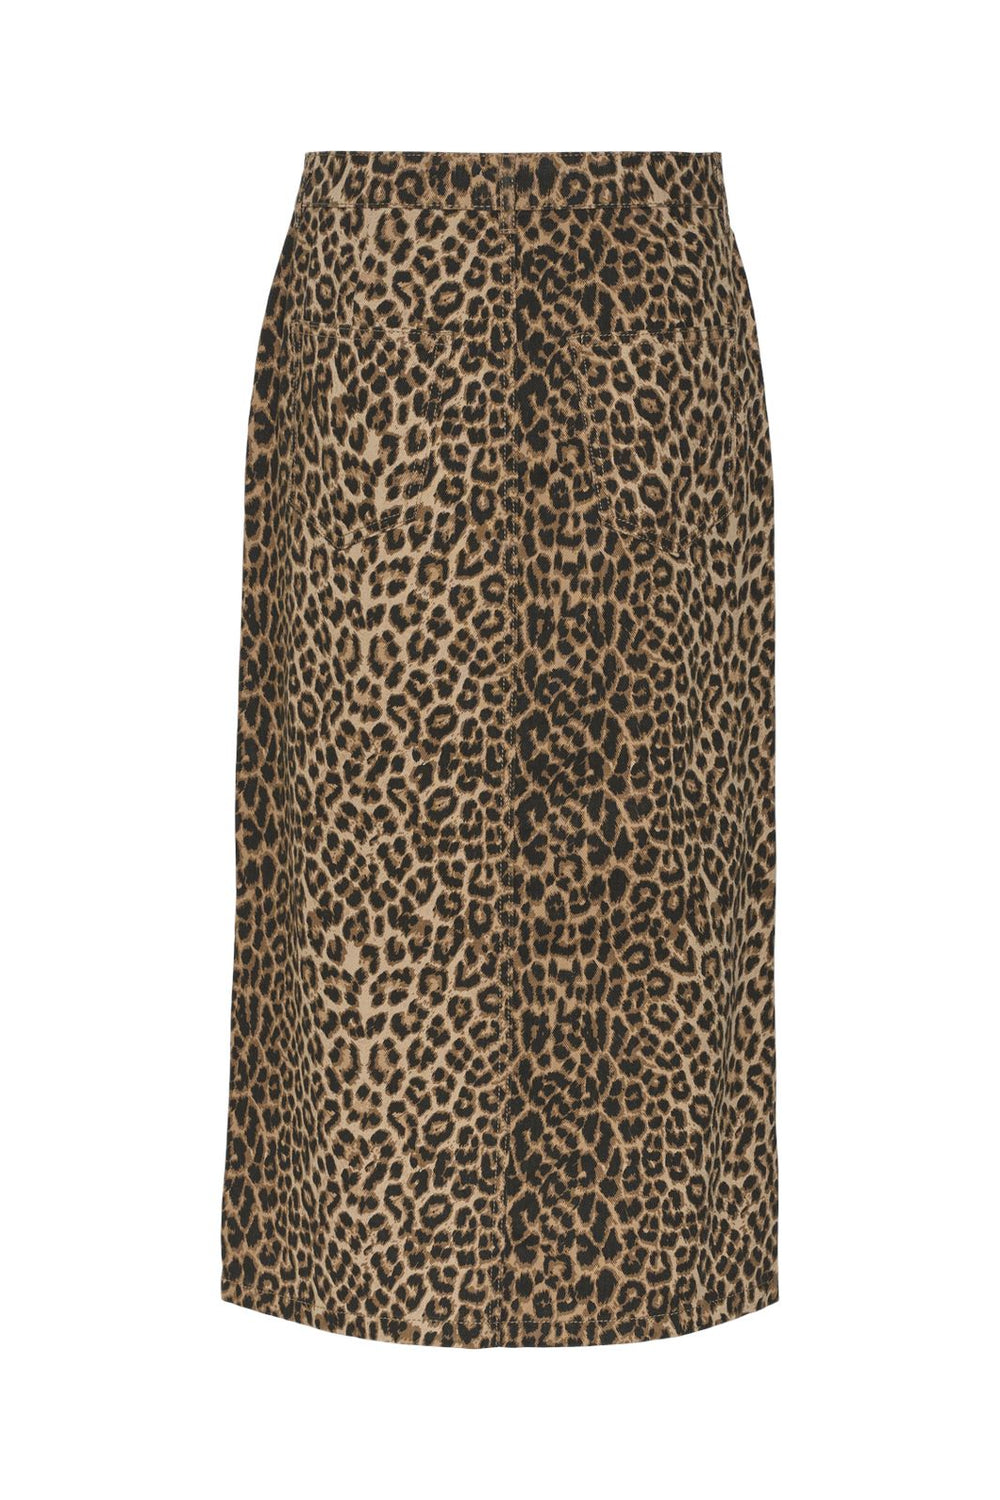 Vero Moda - Vmveri Hr Leo Calf Skirt - 4675847 Silver Mink Leopard